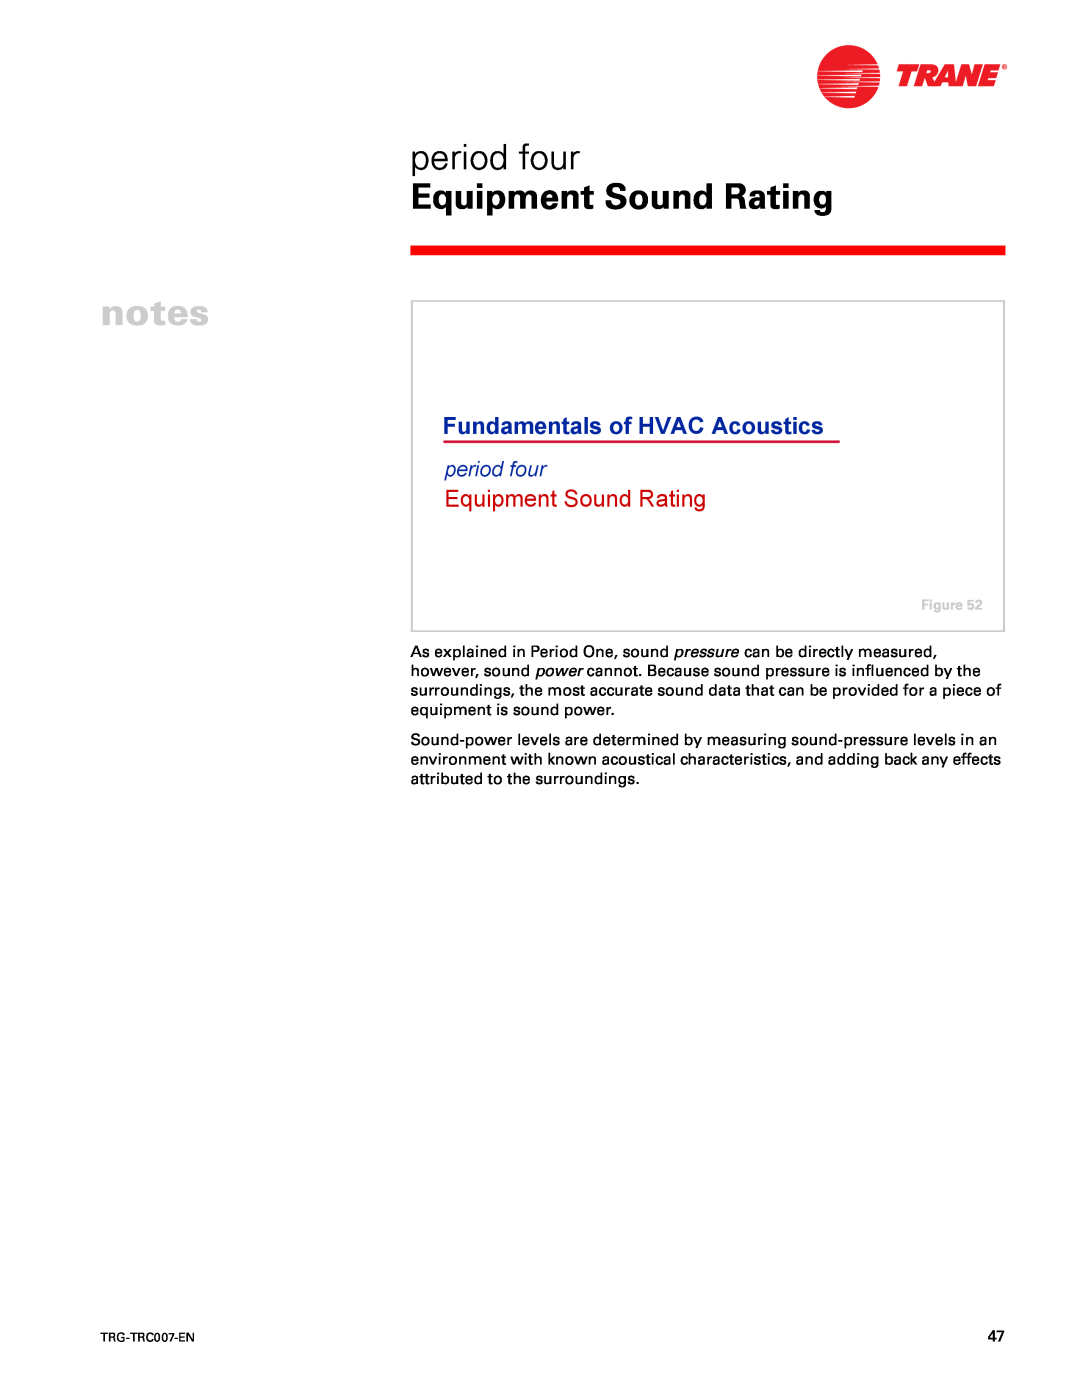 Trane TRG-TRC007-EN manual period four, Equipment Sound Rating, Fundamentals of HVAC Acoustics 